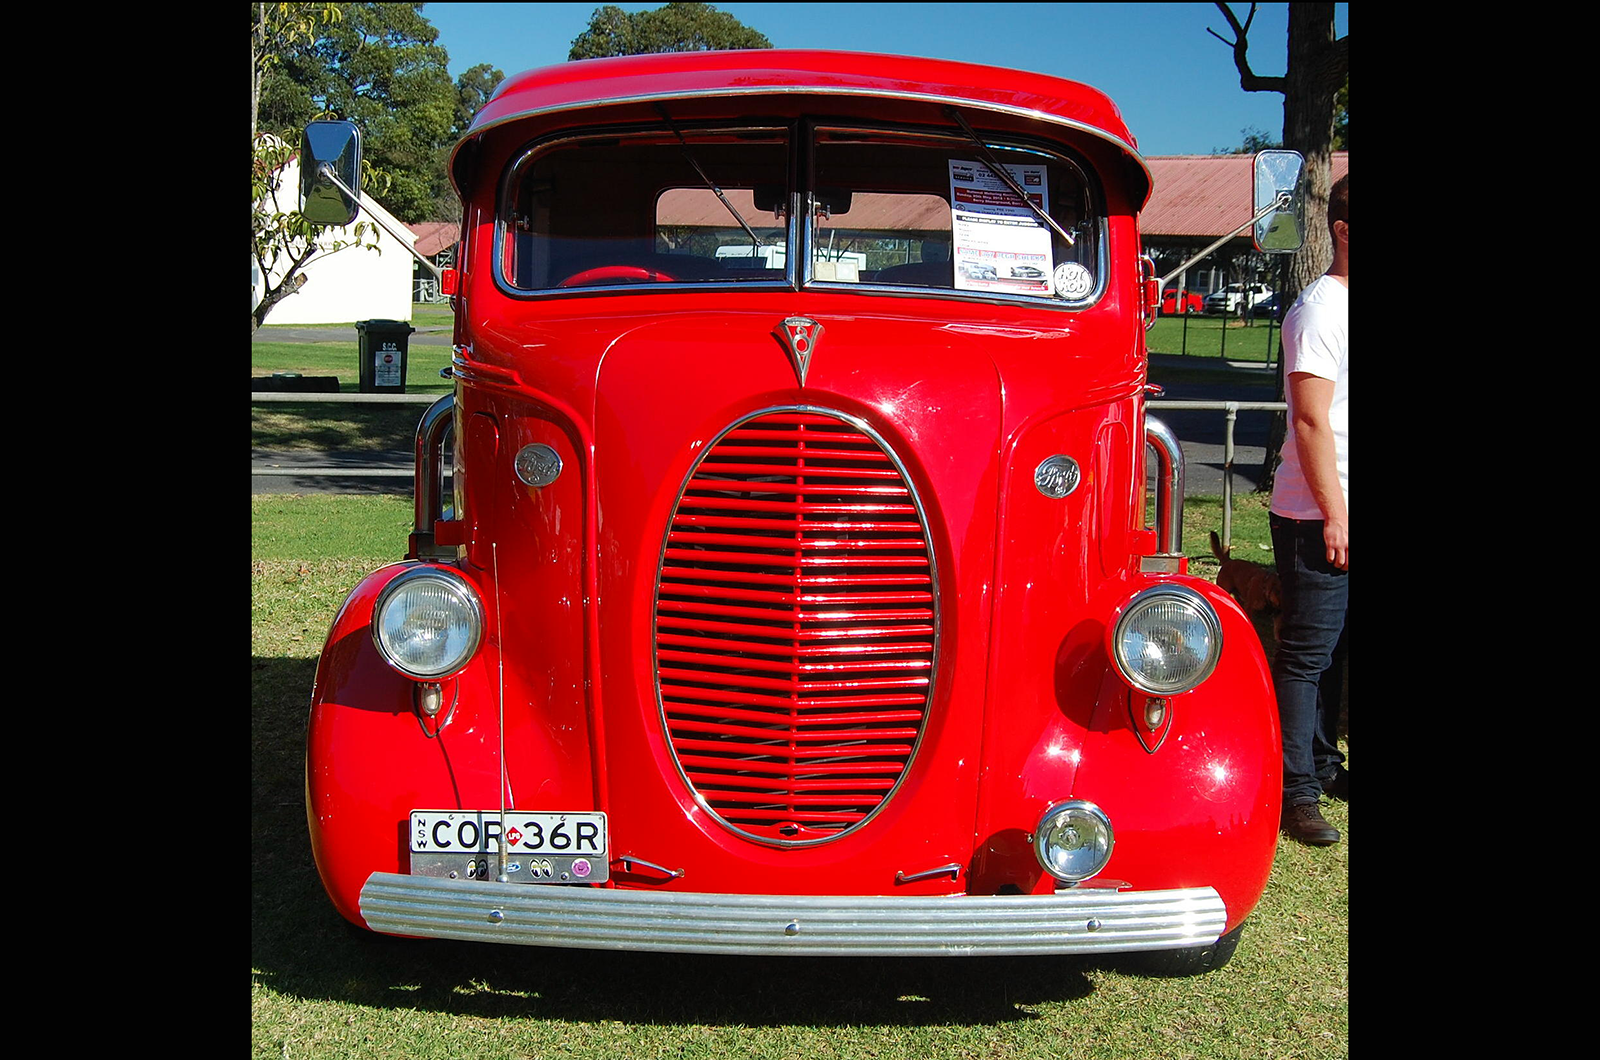 Report: Australia’s National Motoring Heritage Day